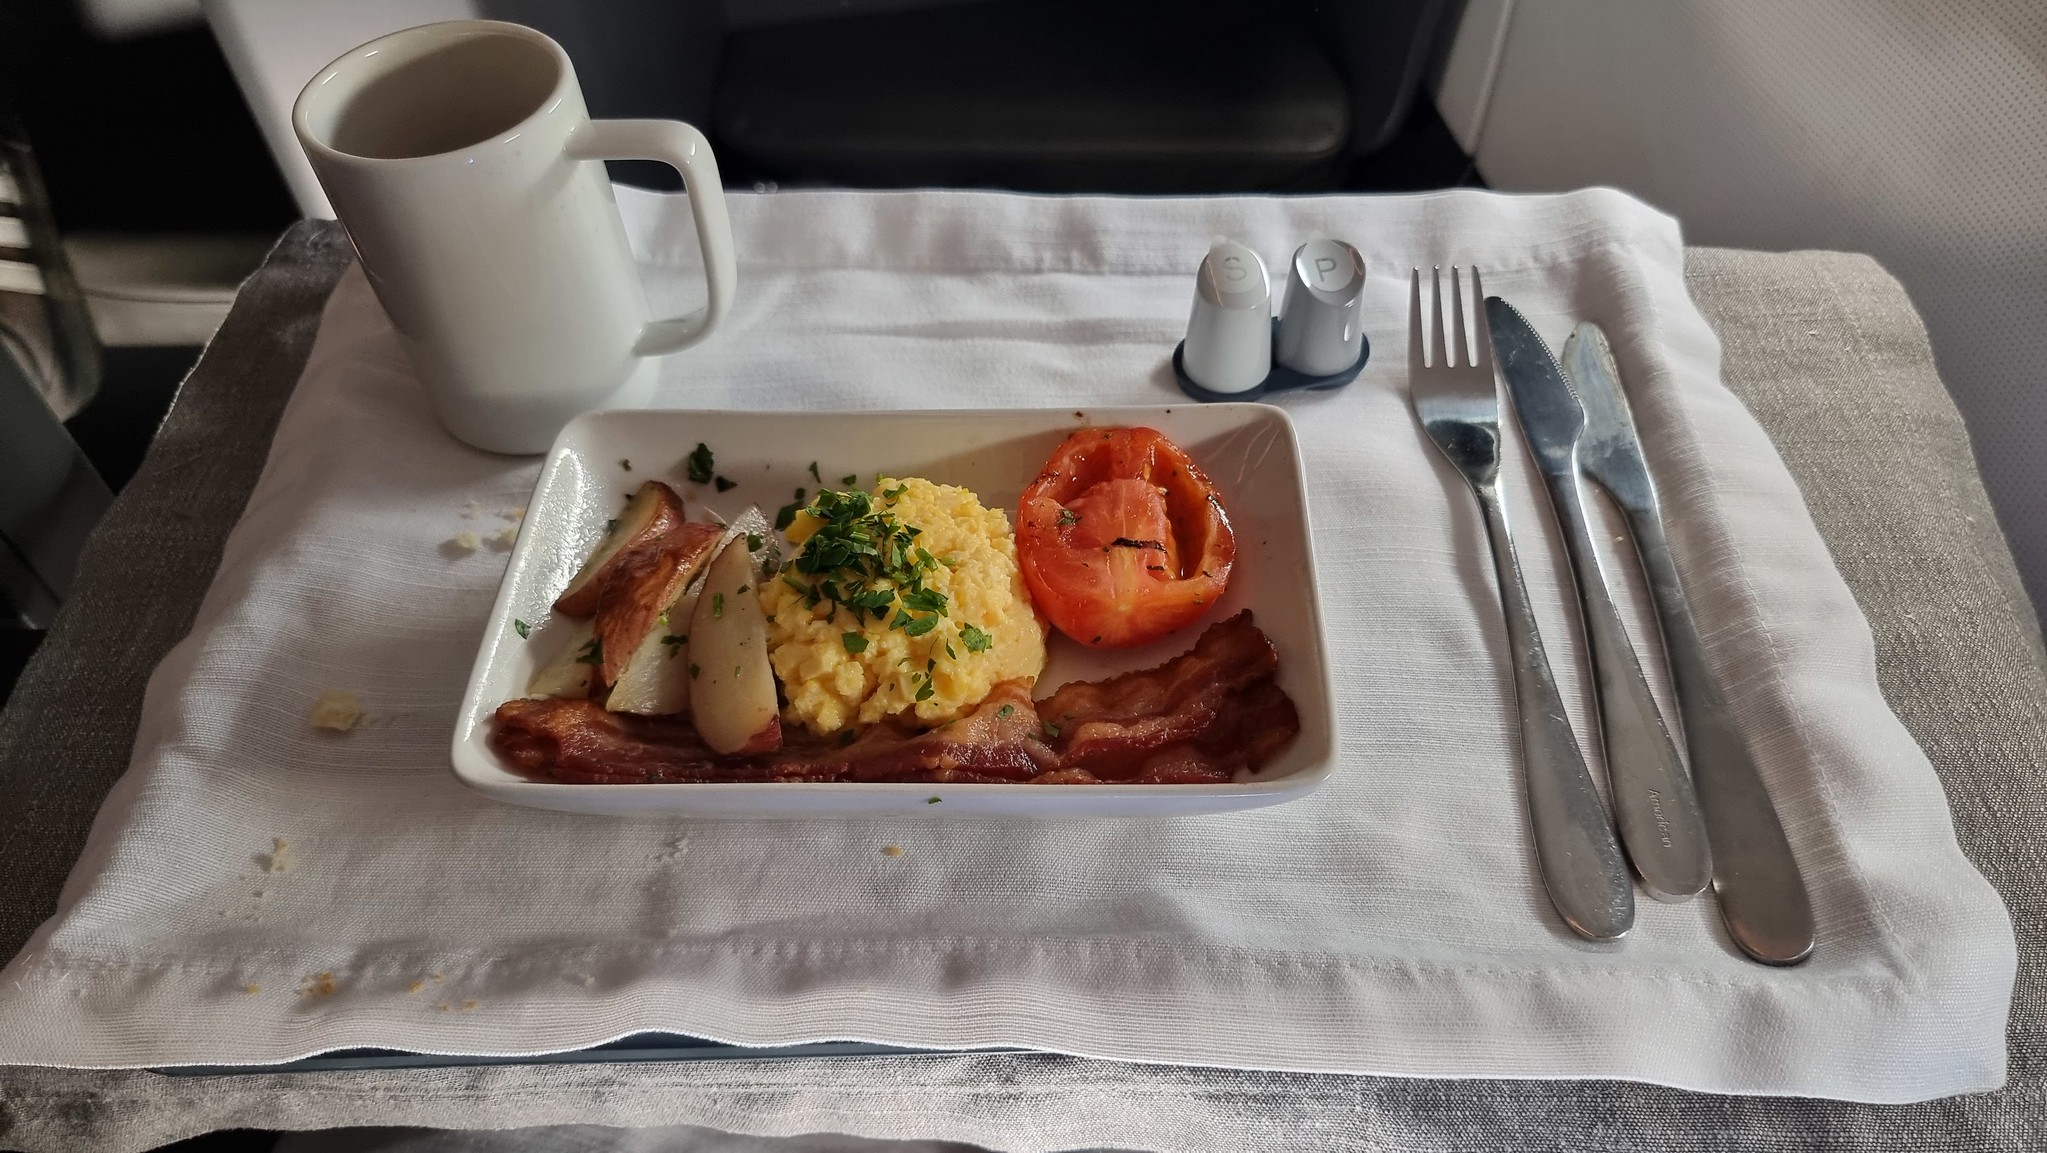 Hot All American Breakfast served on board the AA flight to New York JFK